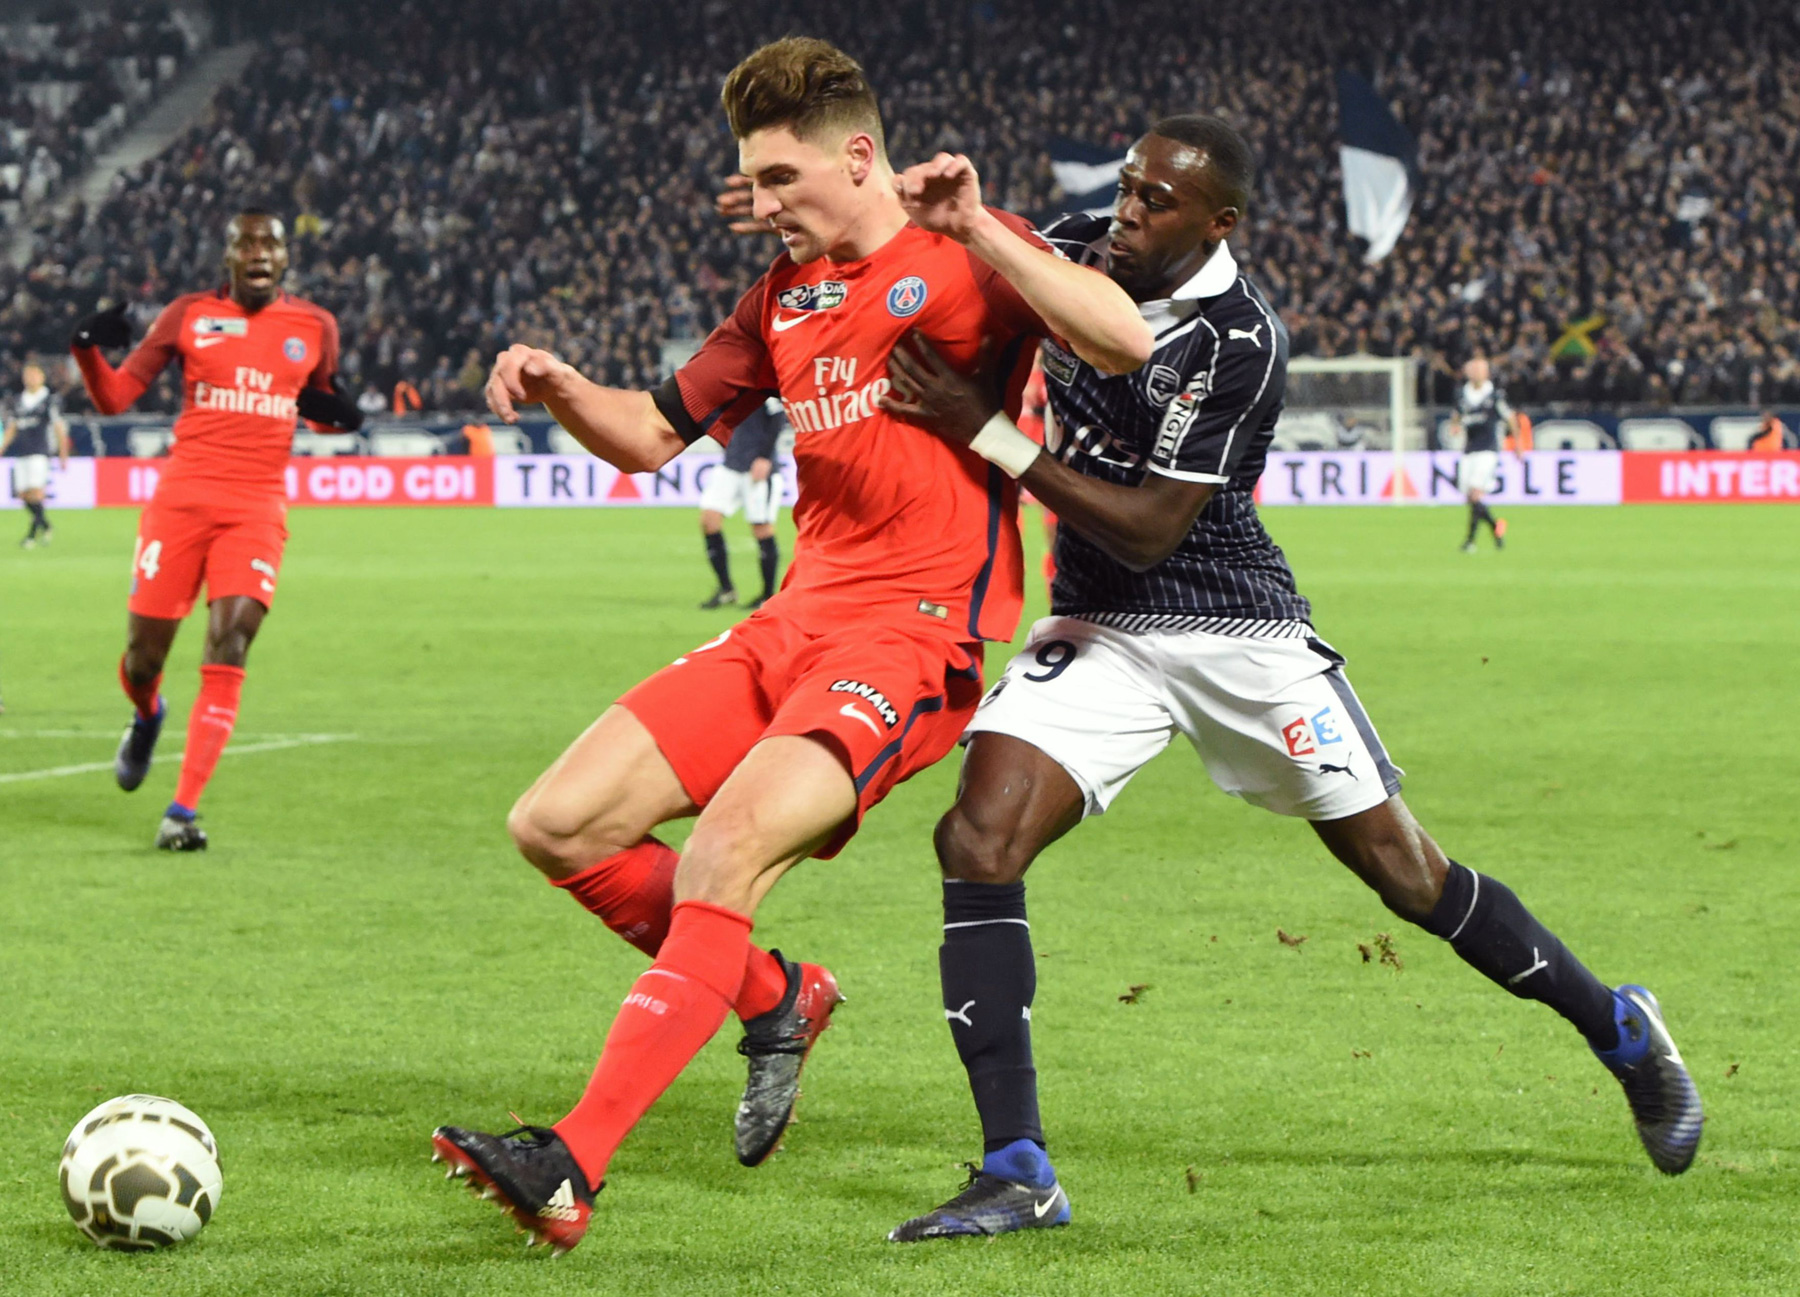 Match Preview: PSG Must Not Overlook Bordeaux - PSG Talk